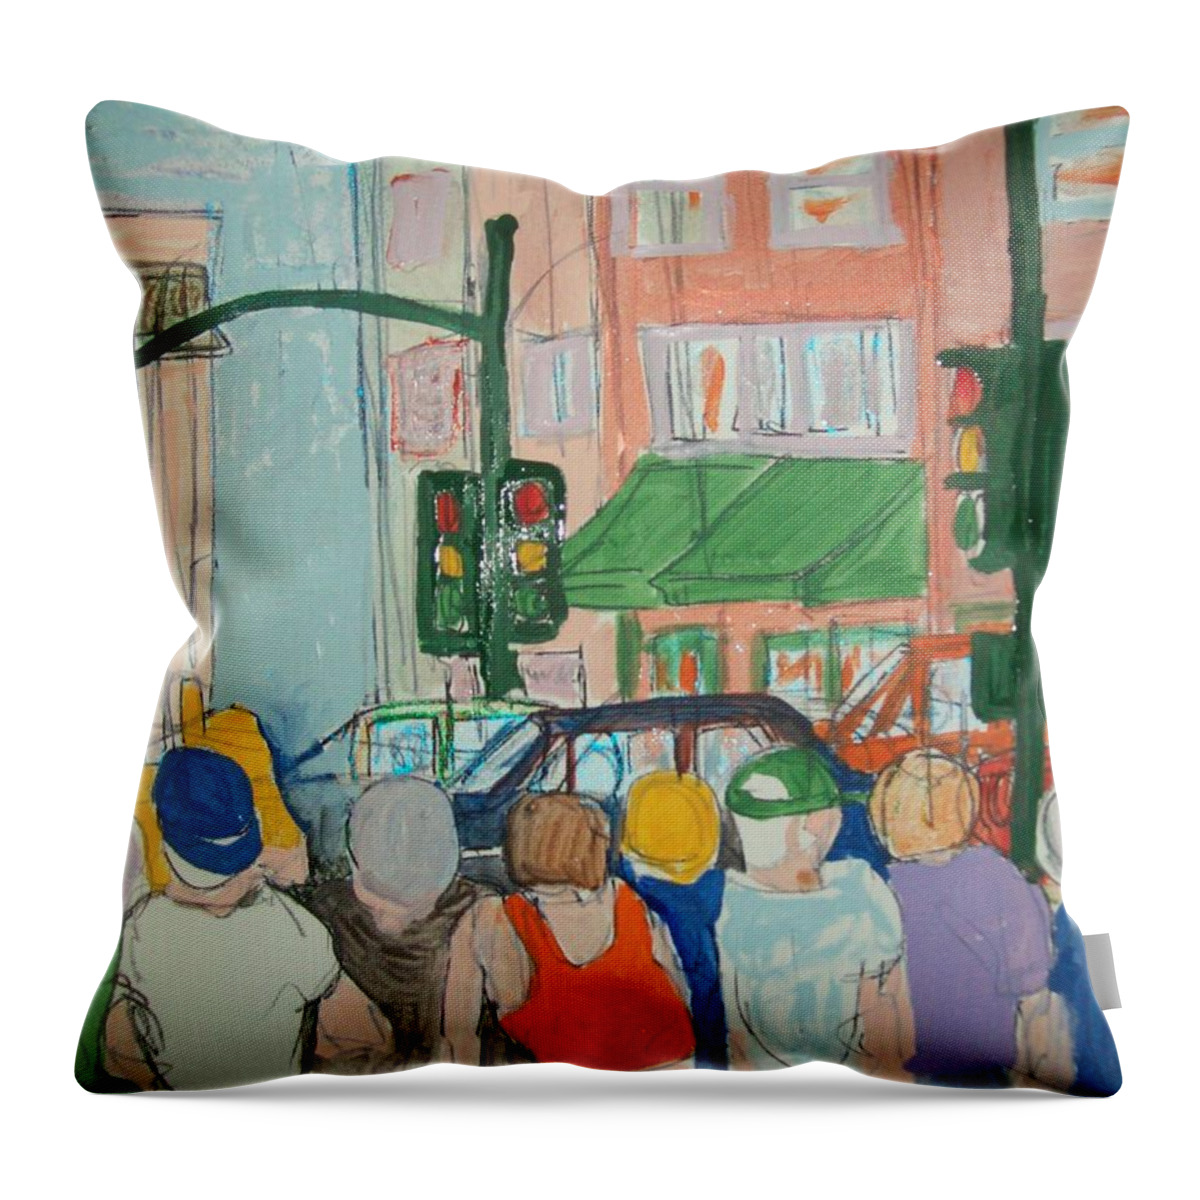 Modesto Throw Pillow featuring the painting American Graffiti Modesto Cruising by James Christiansen